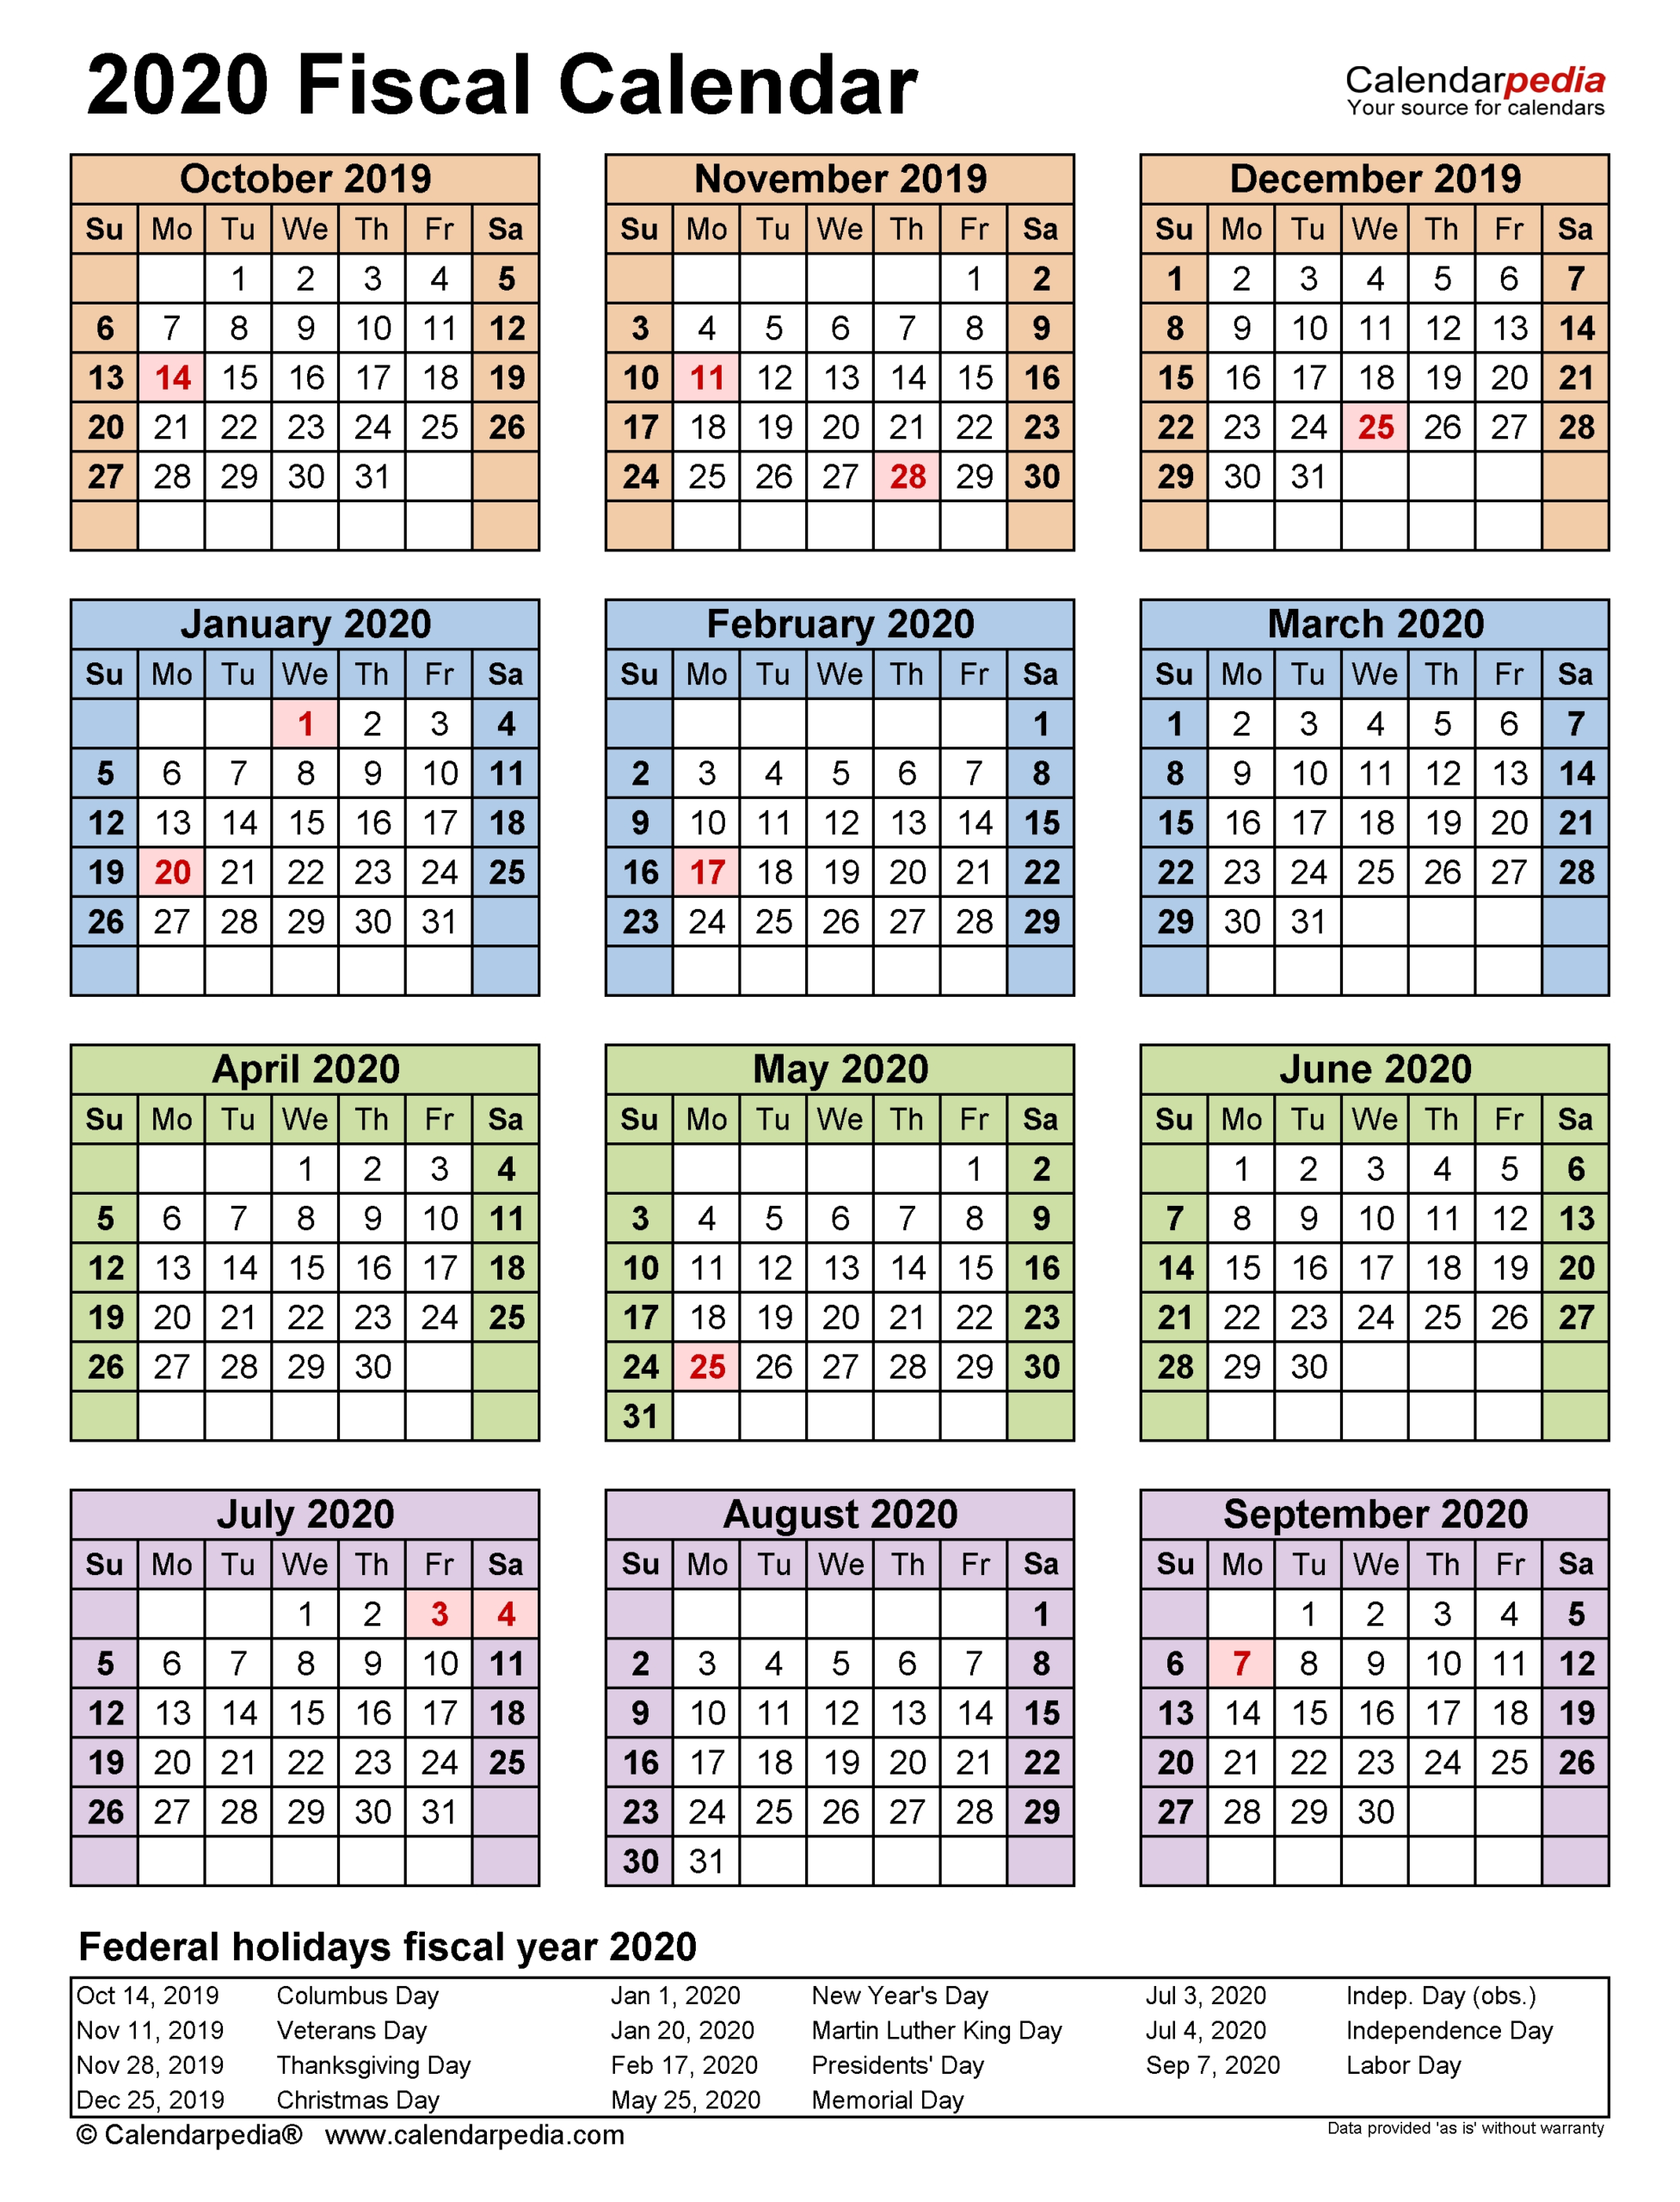 Jlian Date Code 2021 - Template Calendar Design